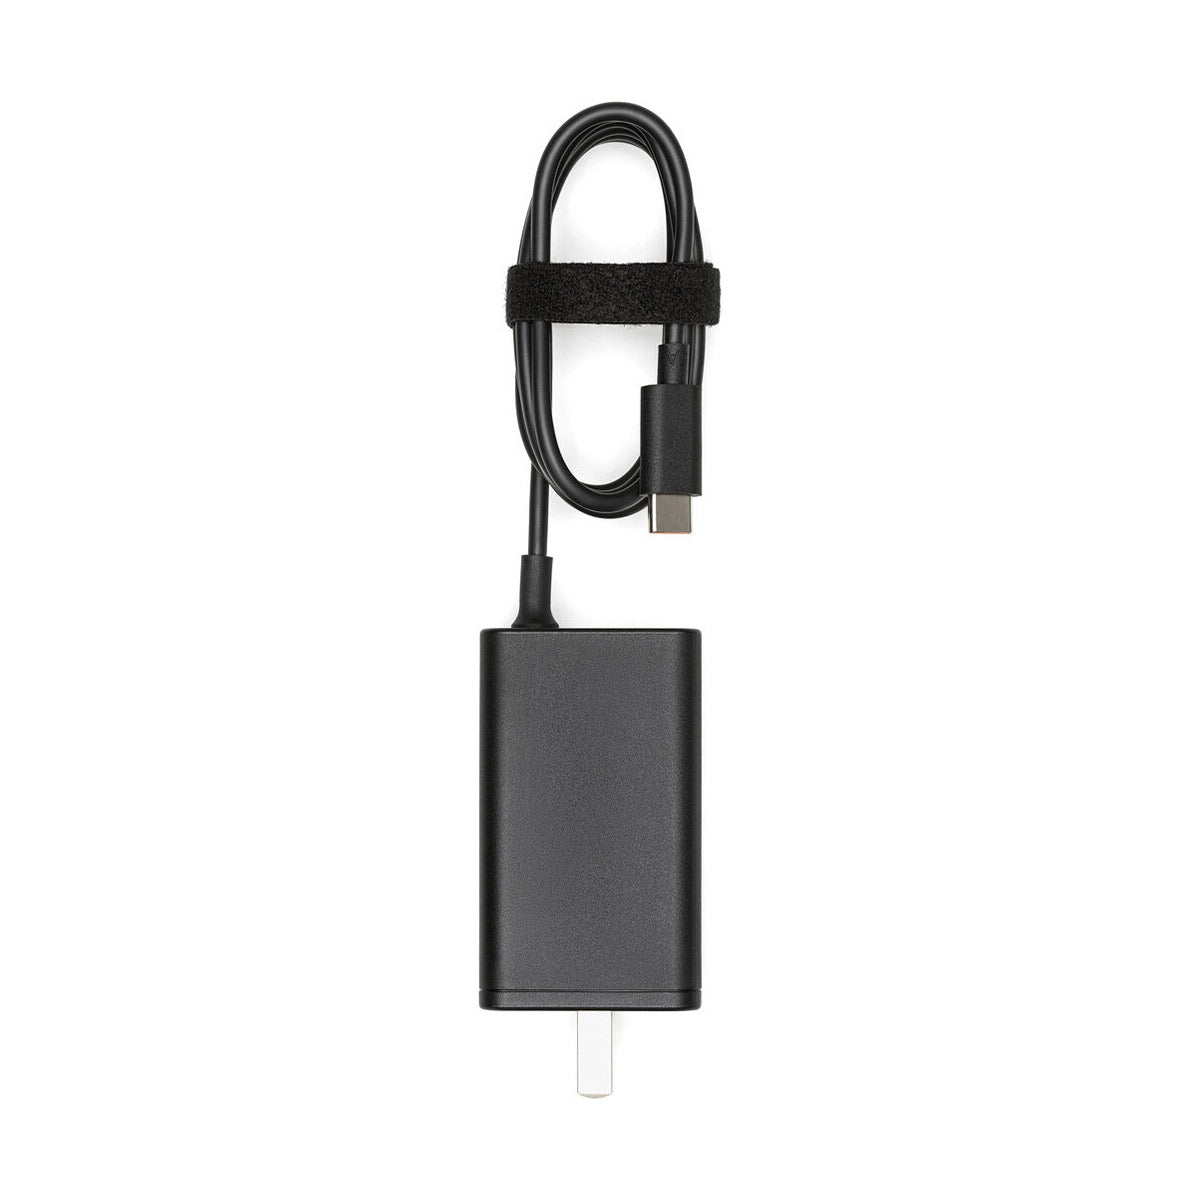 DJI 65W Portable USB Charger